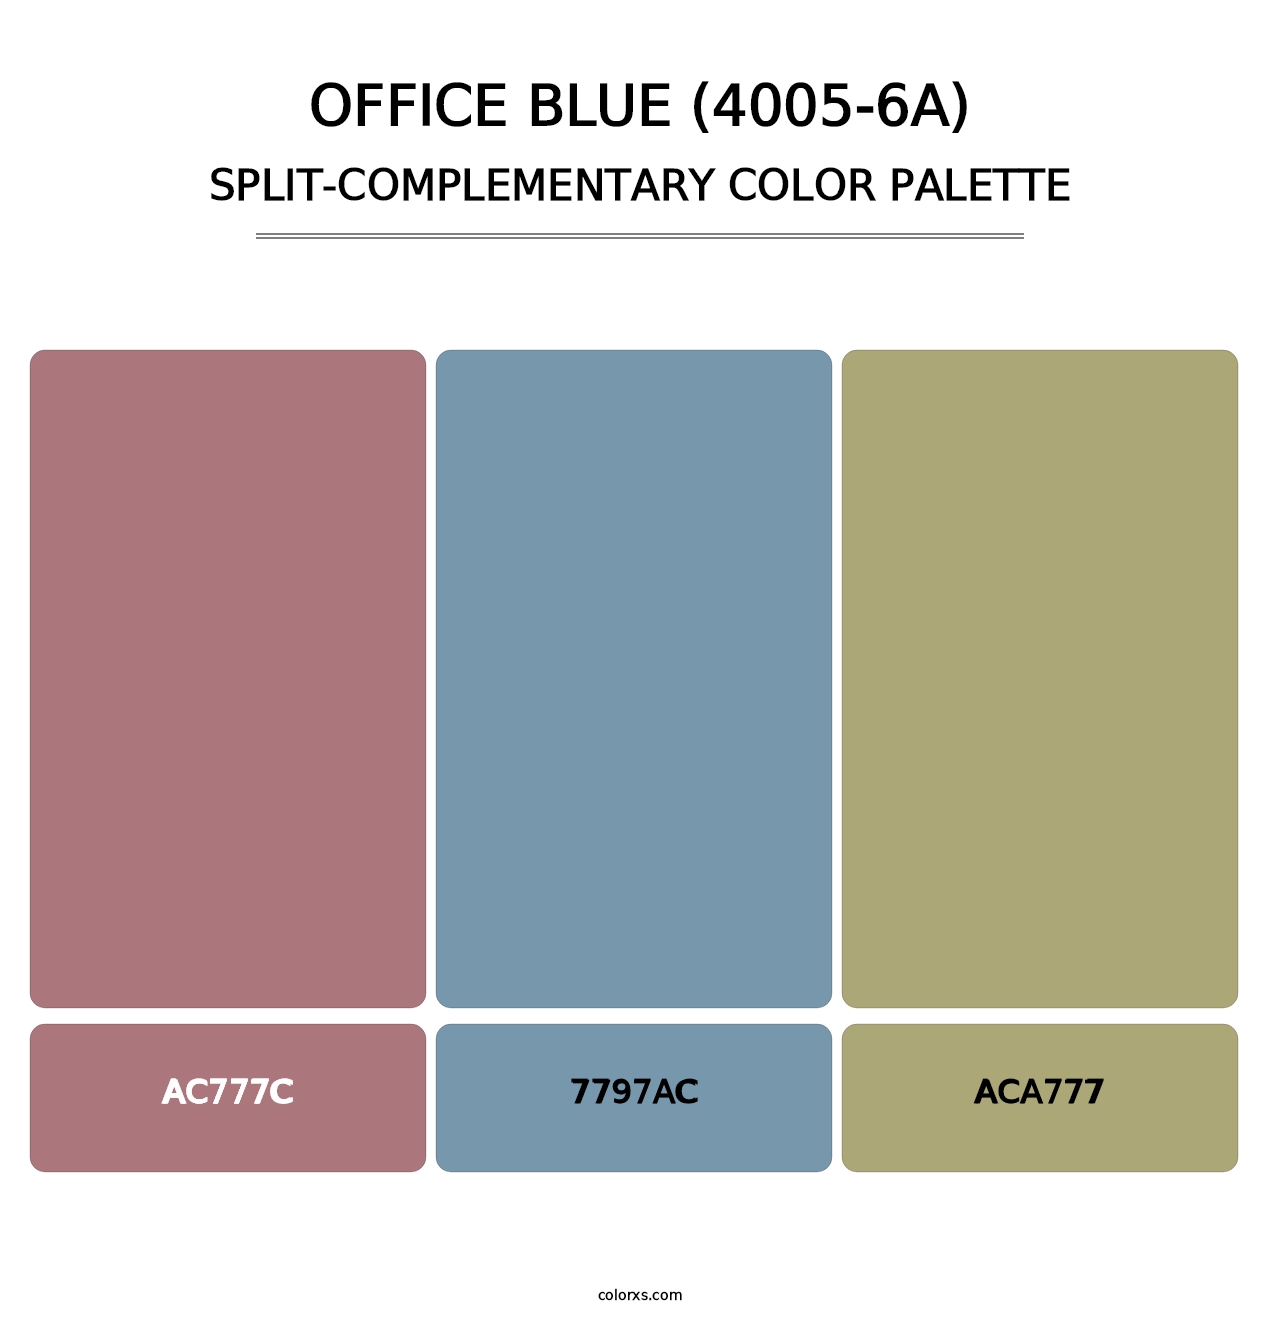 Office Blue (4005-6A) - Split-Complementary Color Palette